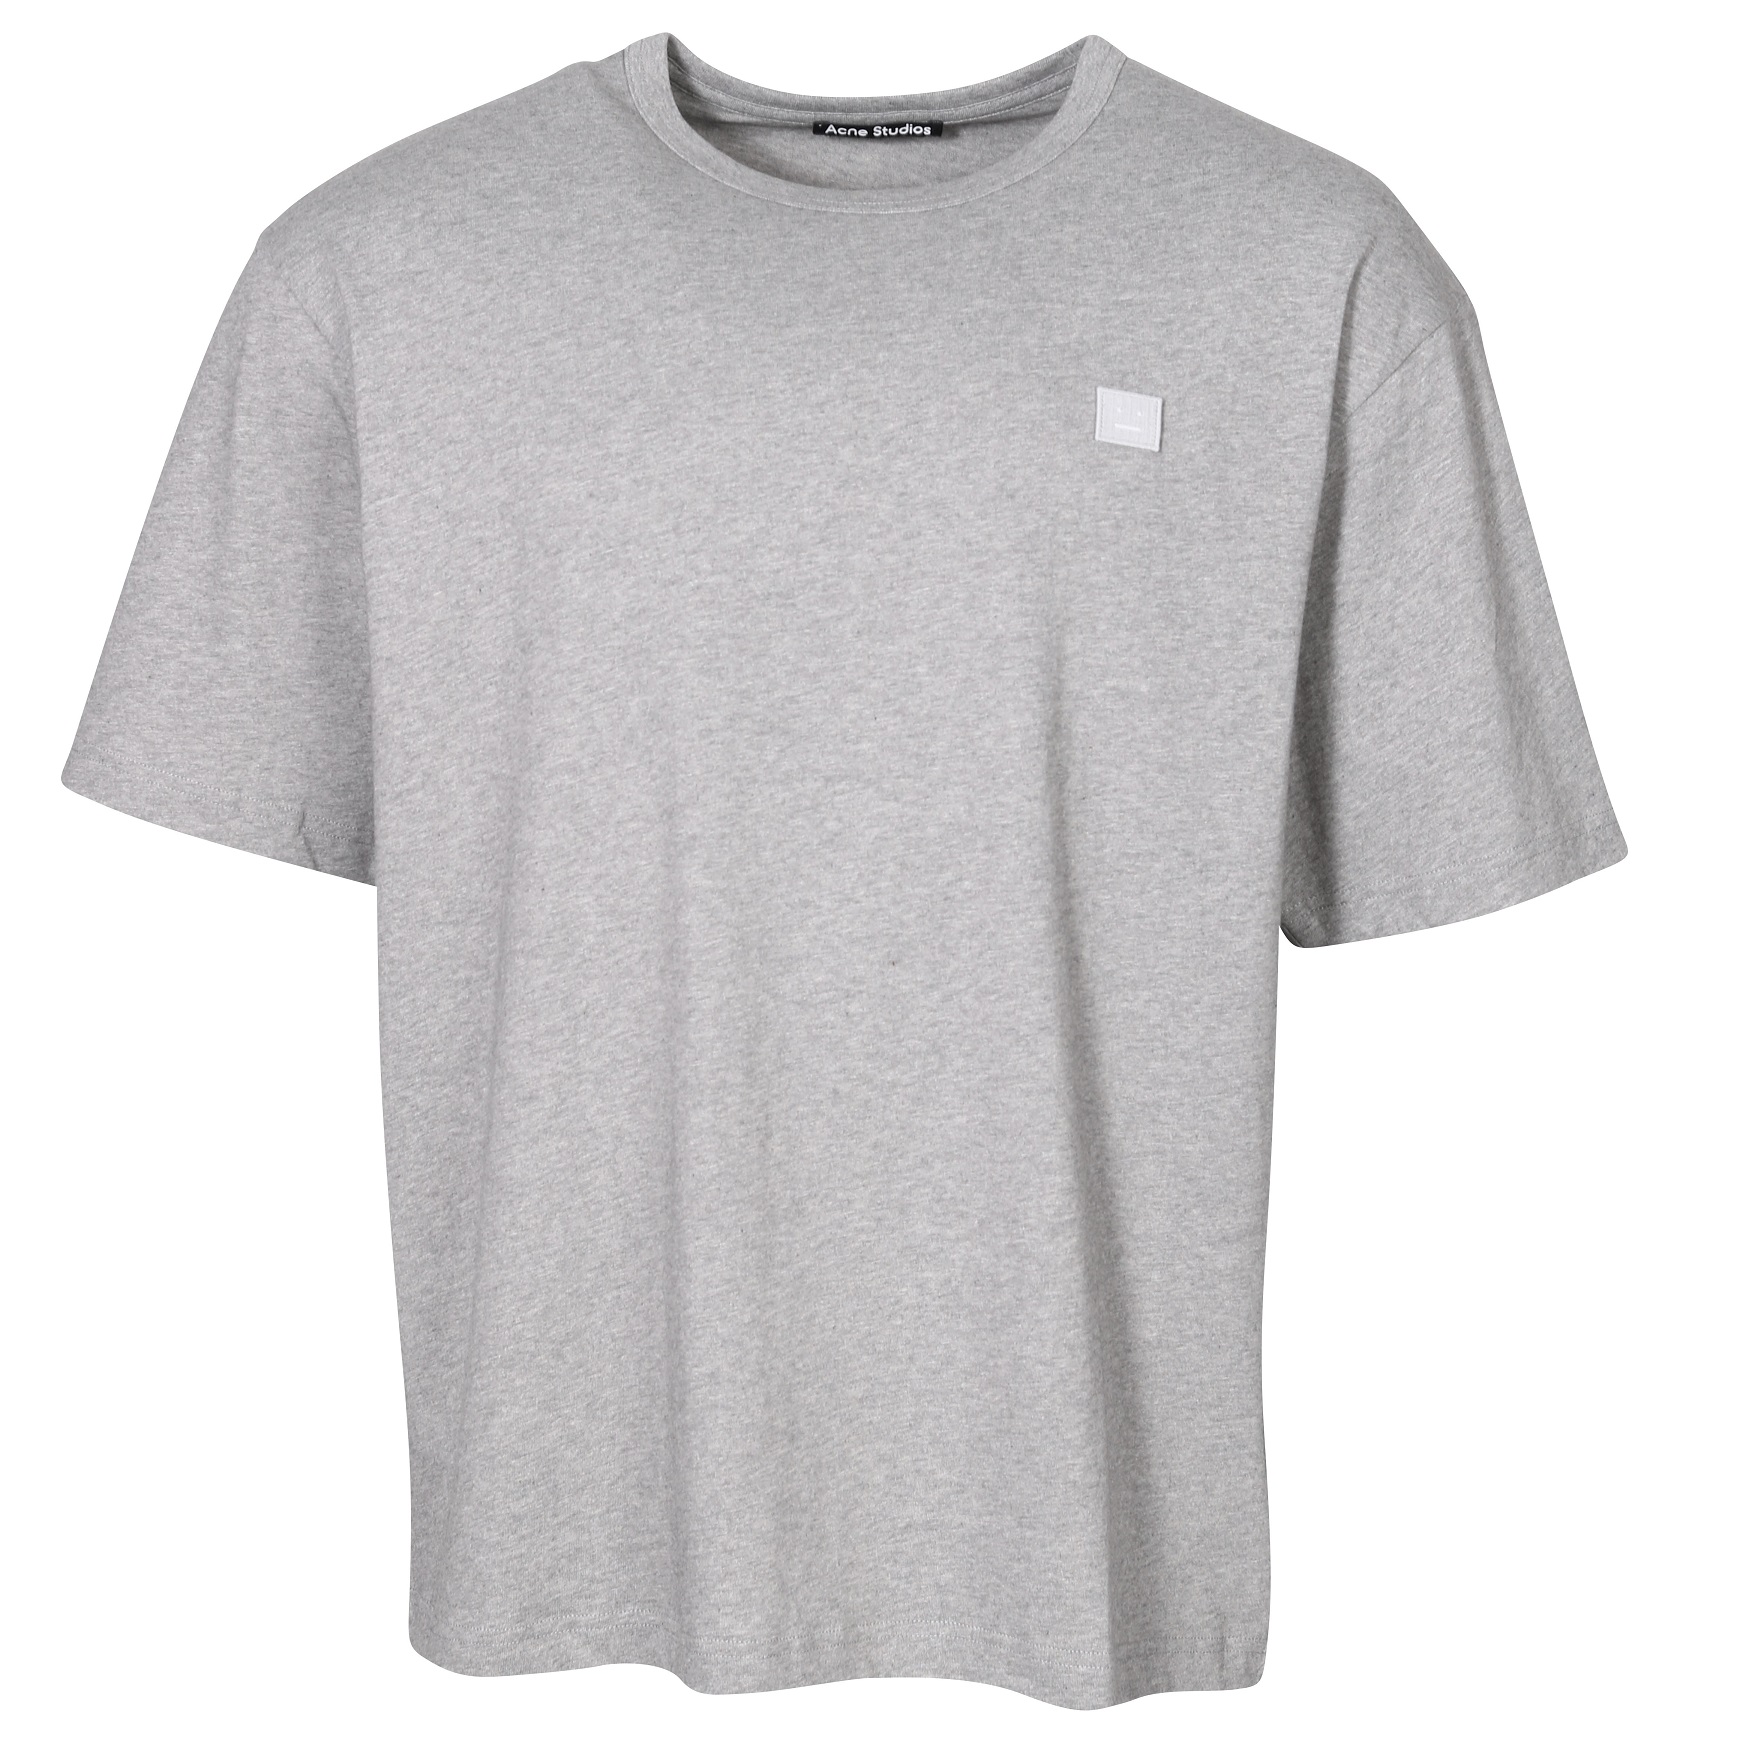 ACNE STUDIOS Unisex Oversize Face T-Shirt in Light Grey Melange XS